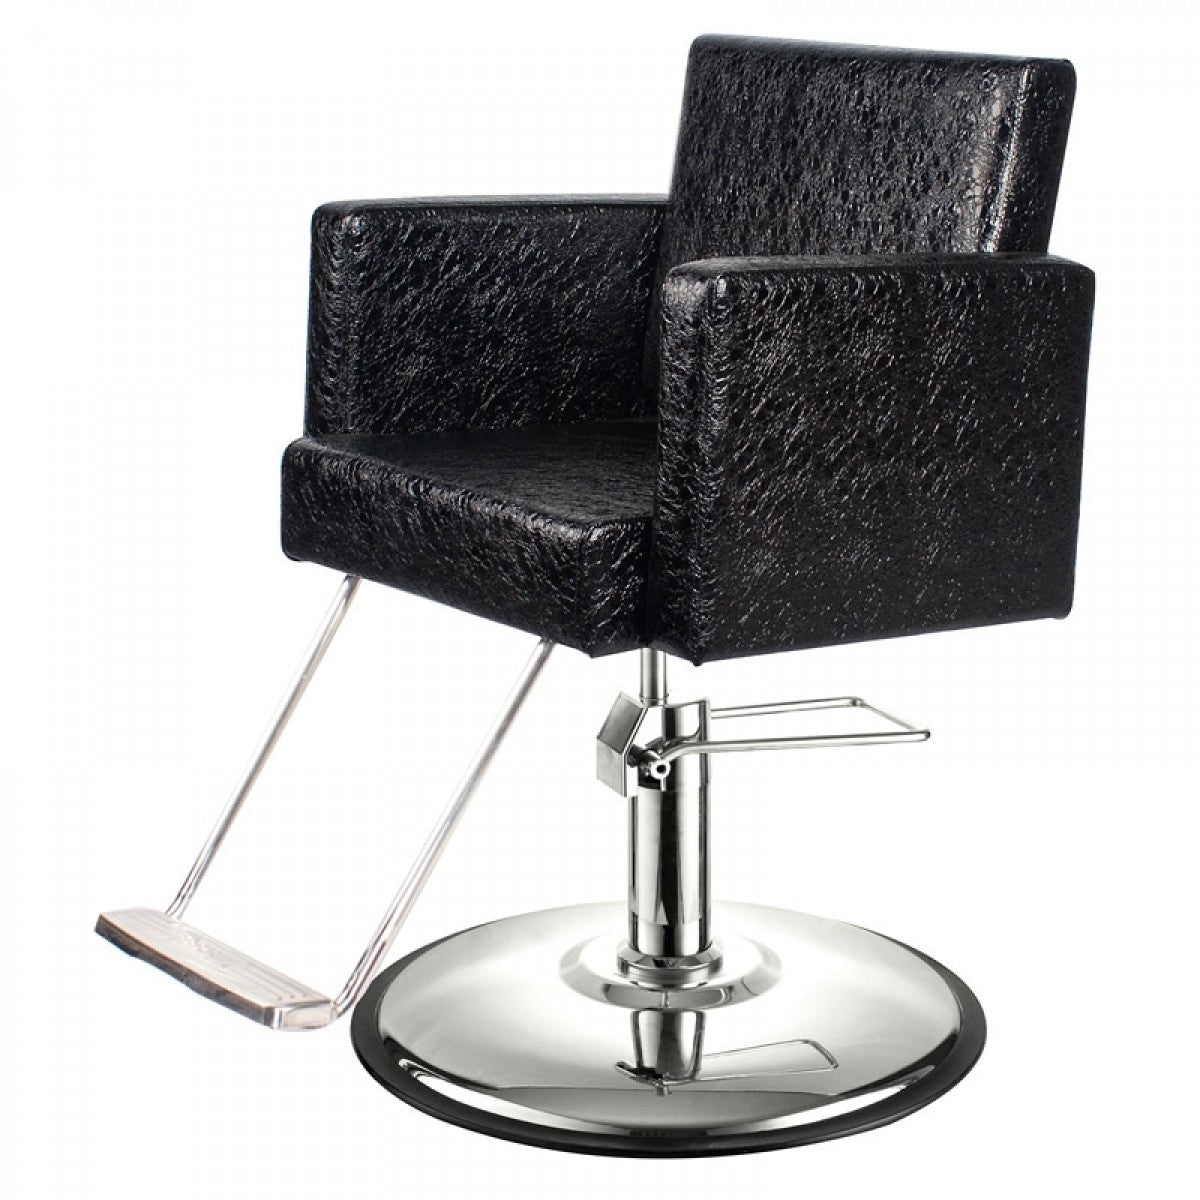 CANON Salon Styling Chair